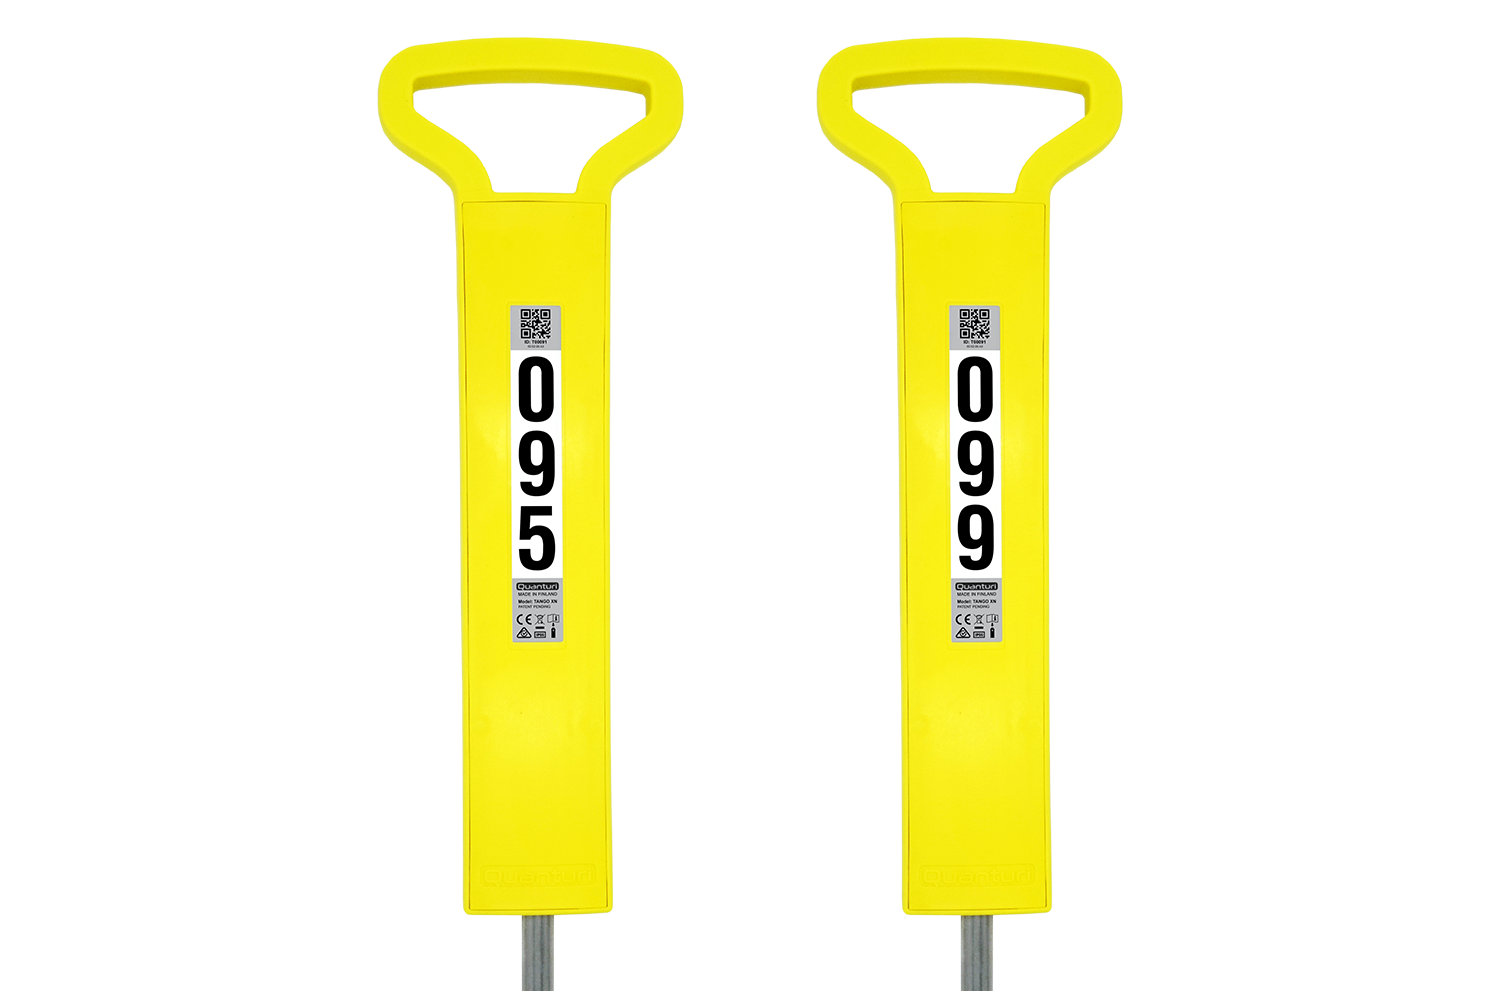 2 yellow Tango XN temperature probe handles